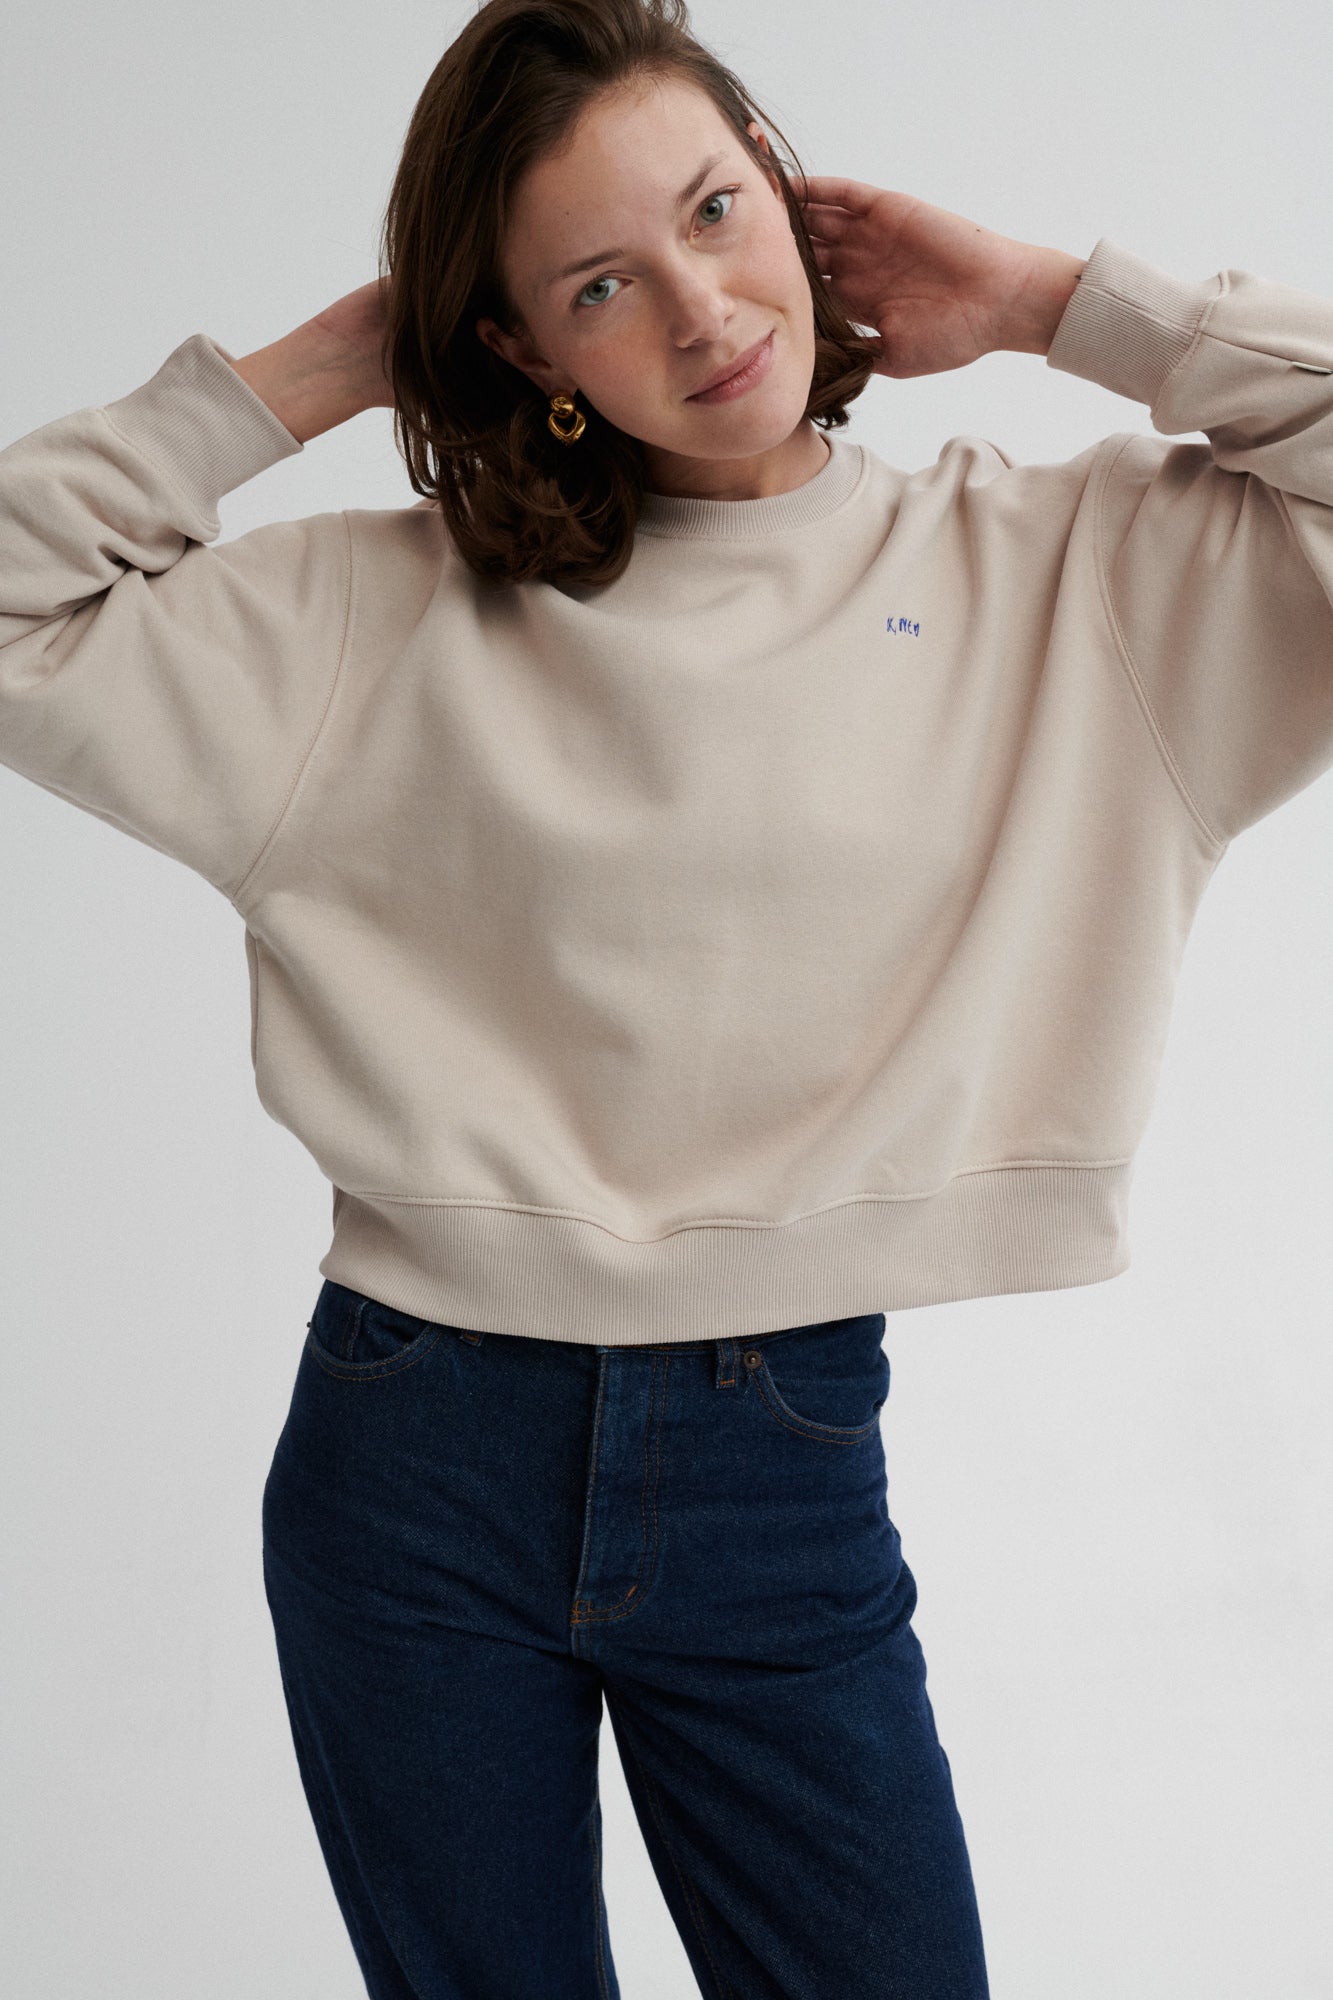 Sweatshirt in cotton / 17 / 17 / sandshell / embroidery